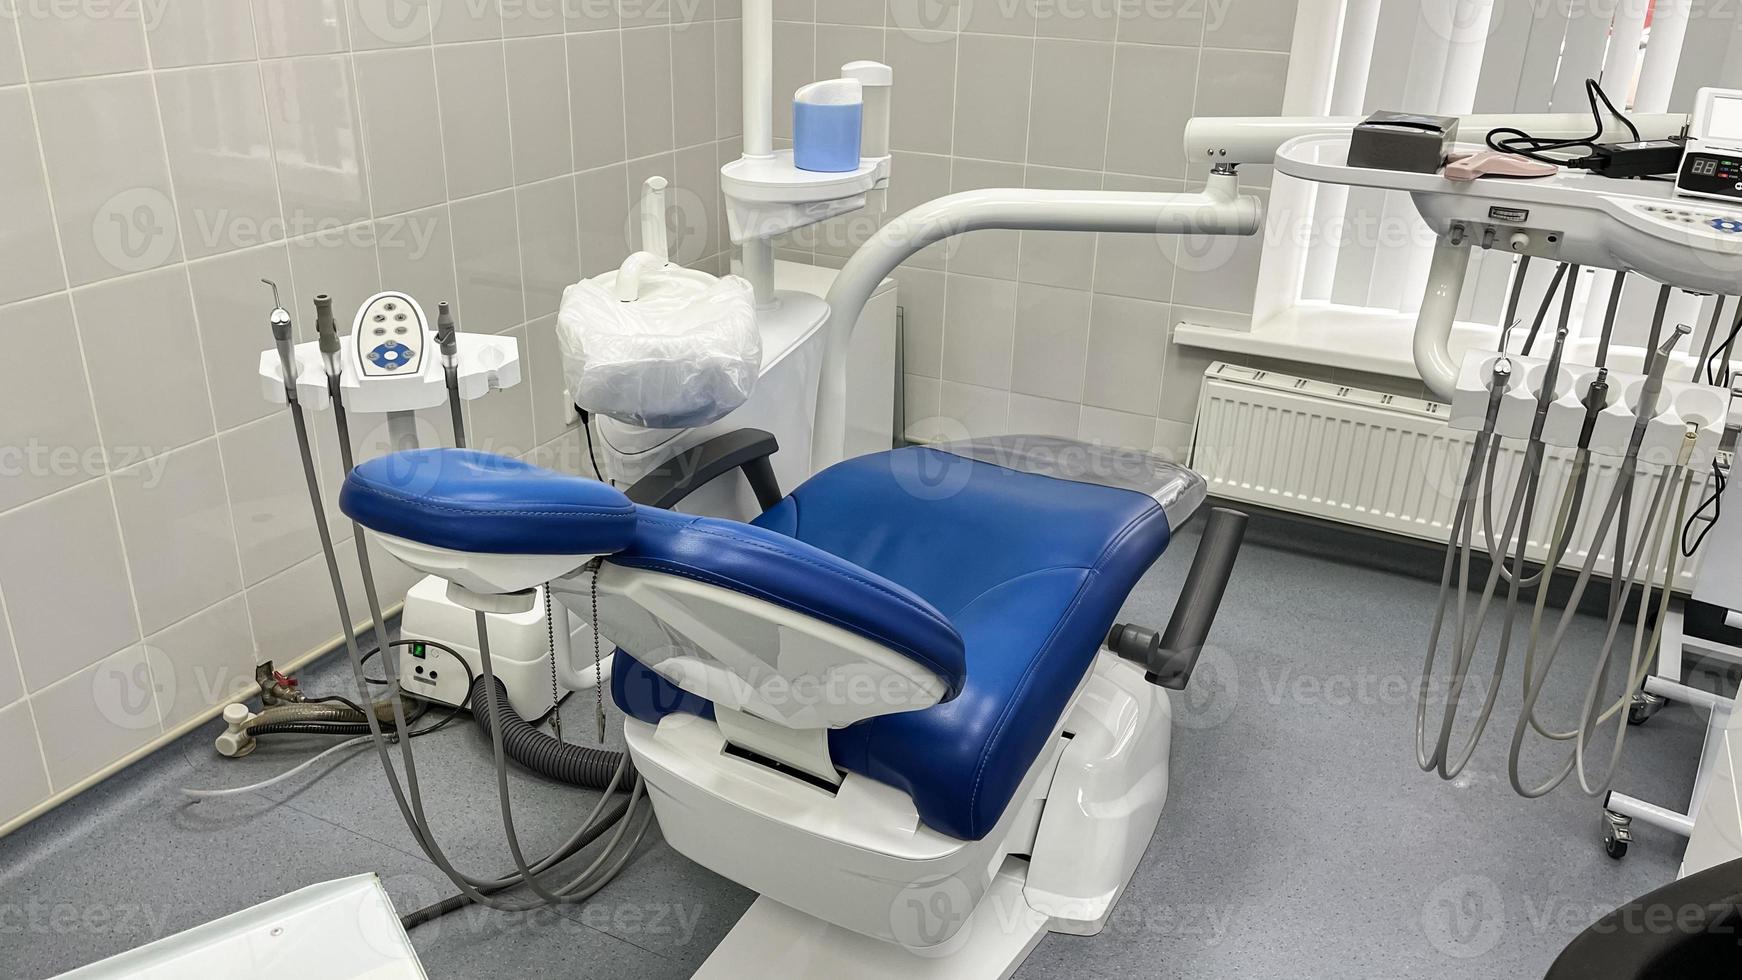 Dental Büro und Dental Stuhl zum Dental Behandlung. foto